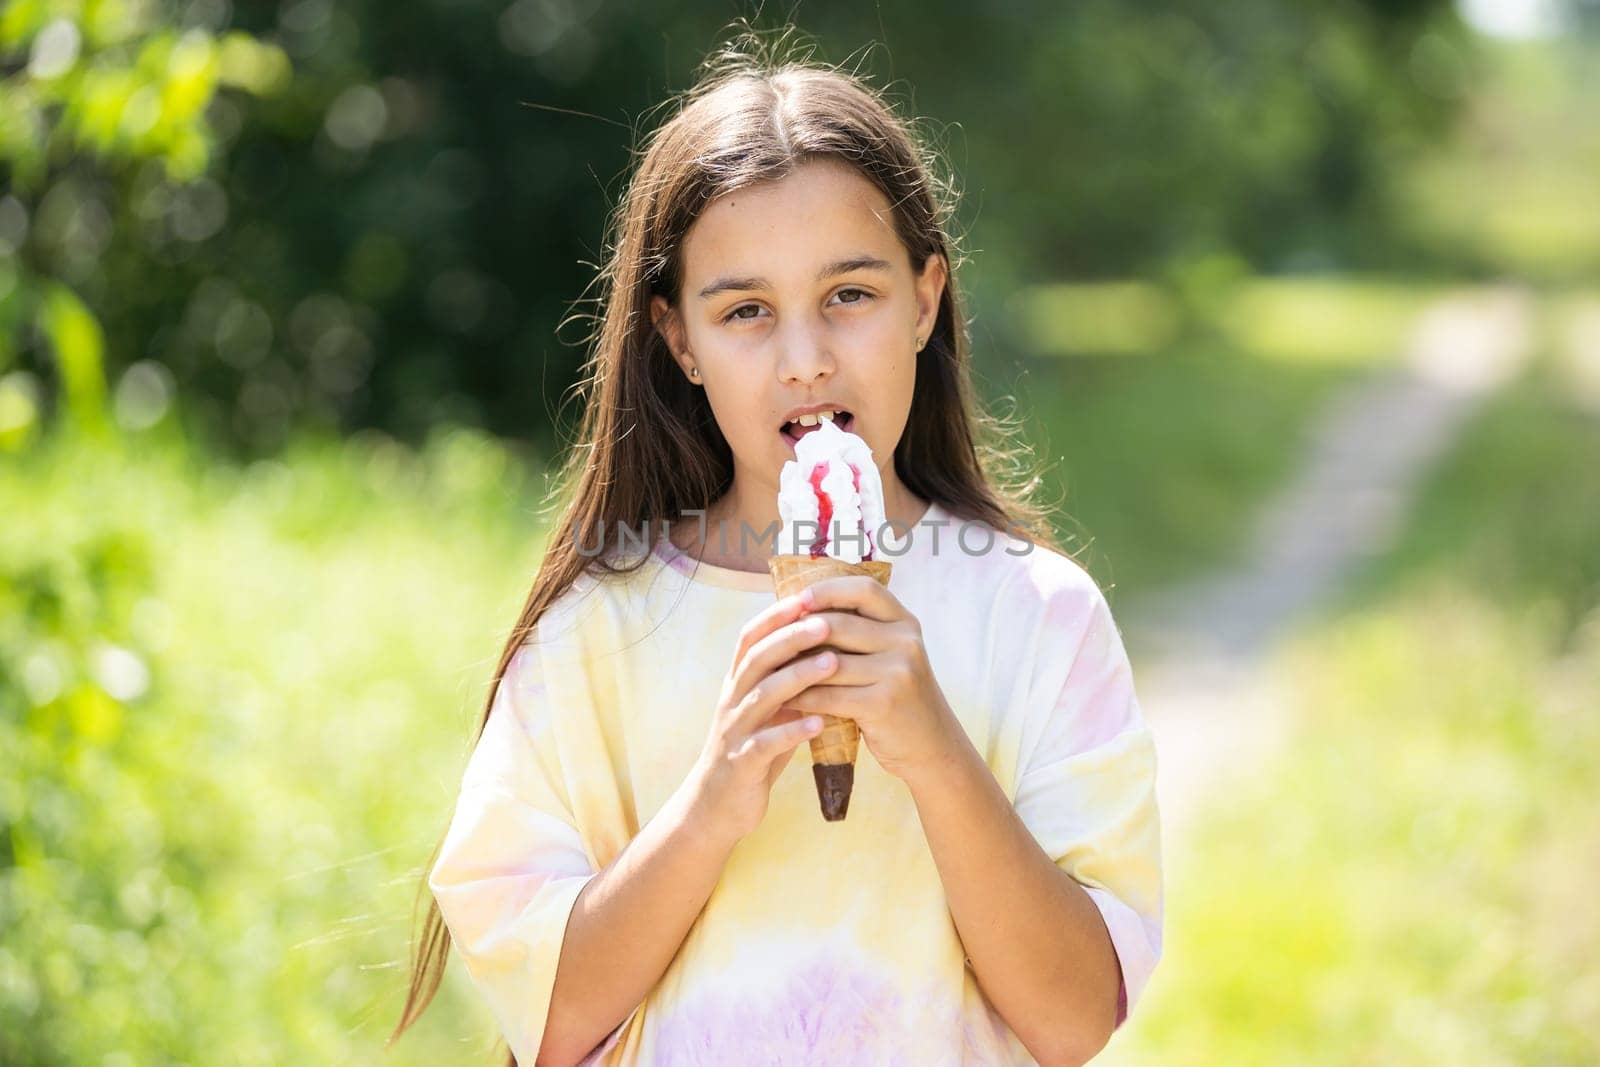 Cute Girl Eating Ice Cream by Andelov13